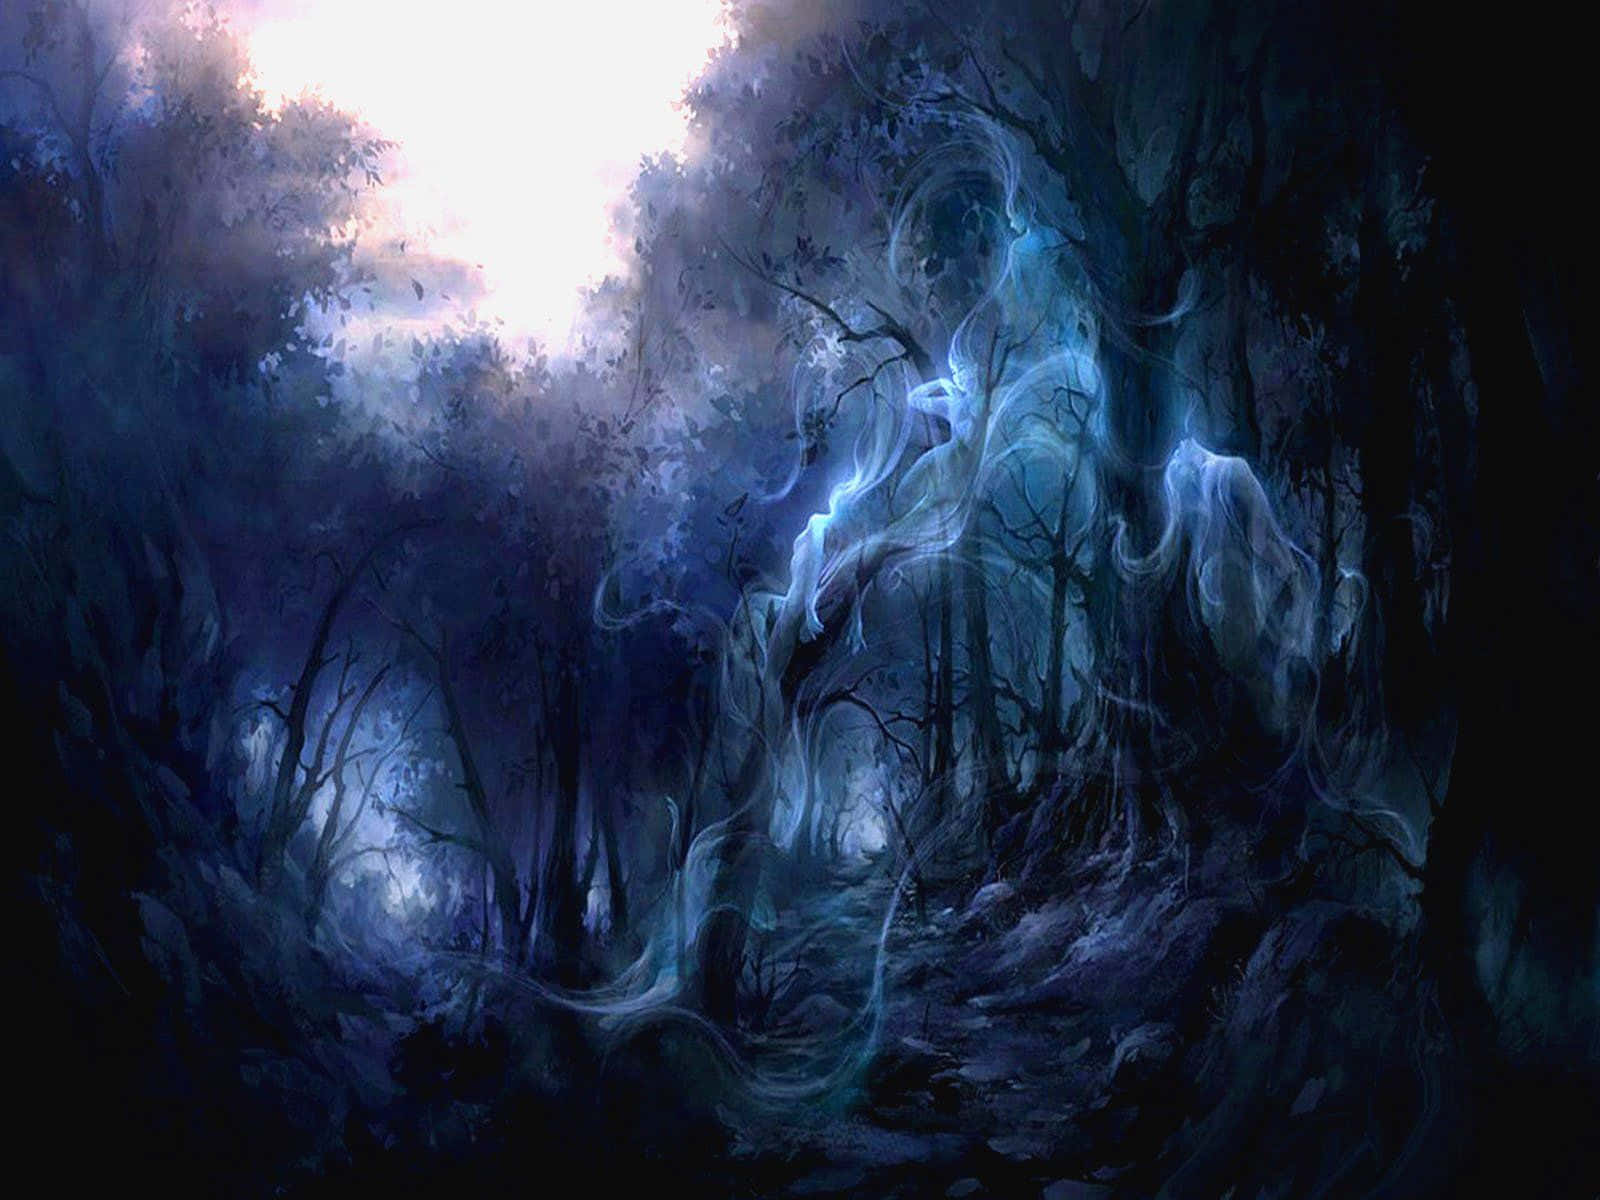 Mysterious Dark Spirit Emerging from the Shadows Wallpaper